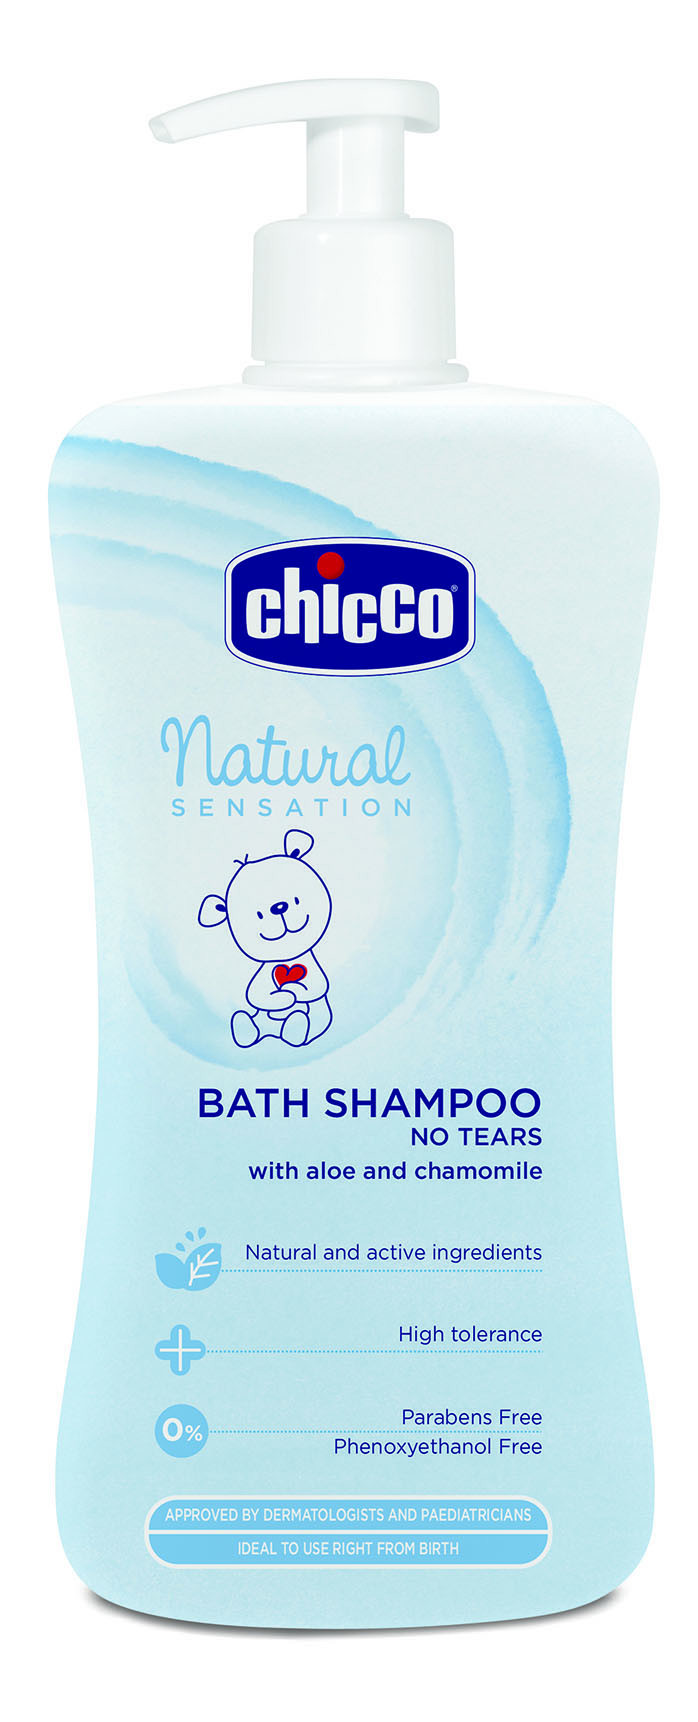 Bath Shampoo 500Ml  Nat Sens Intl-500Ml